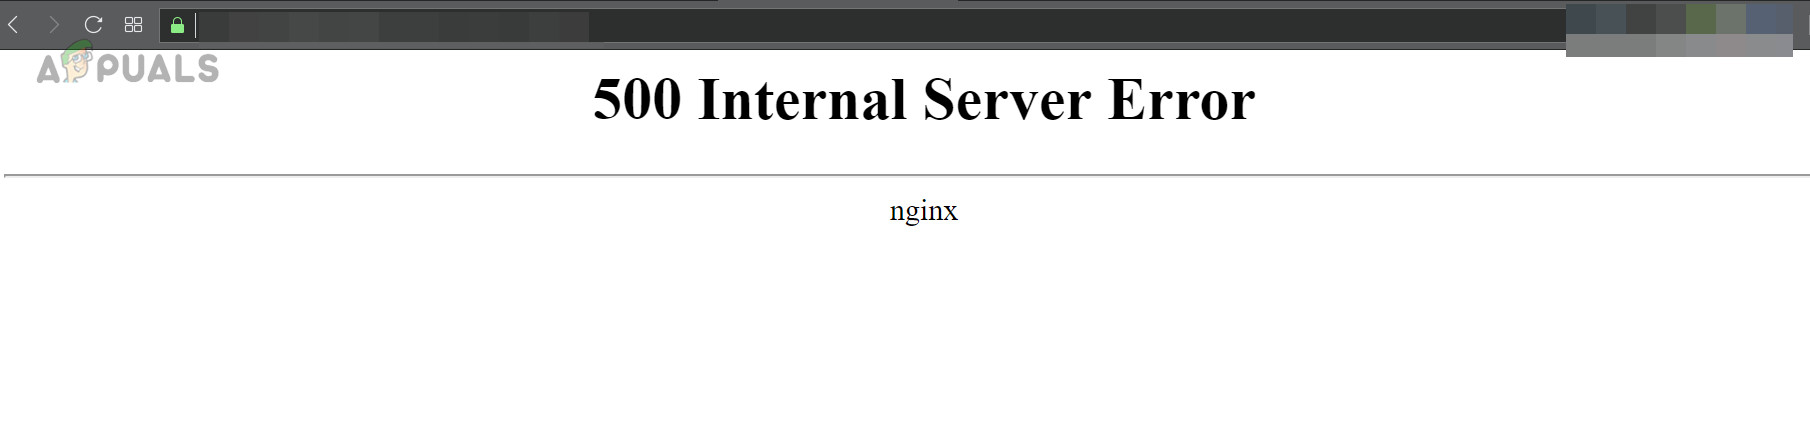 500 Internal Server Error Nginx